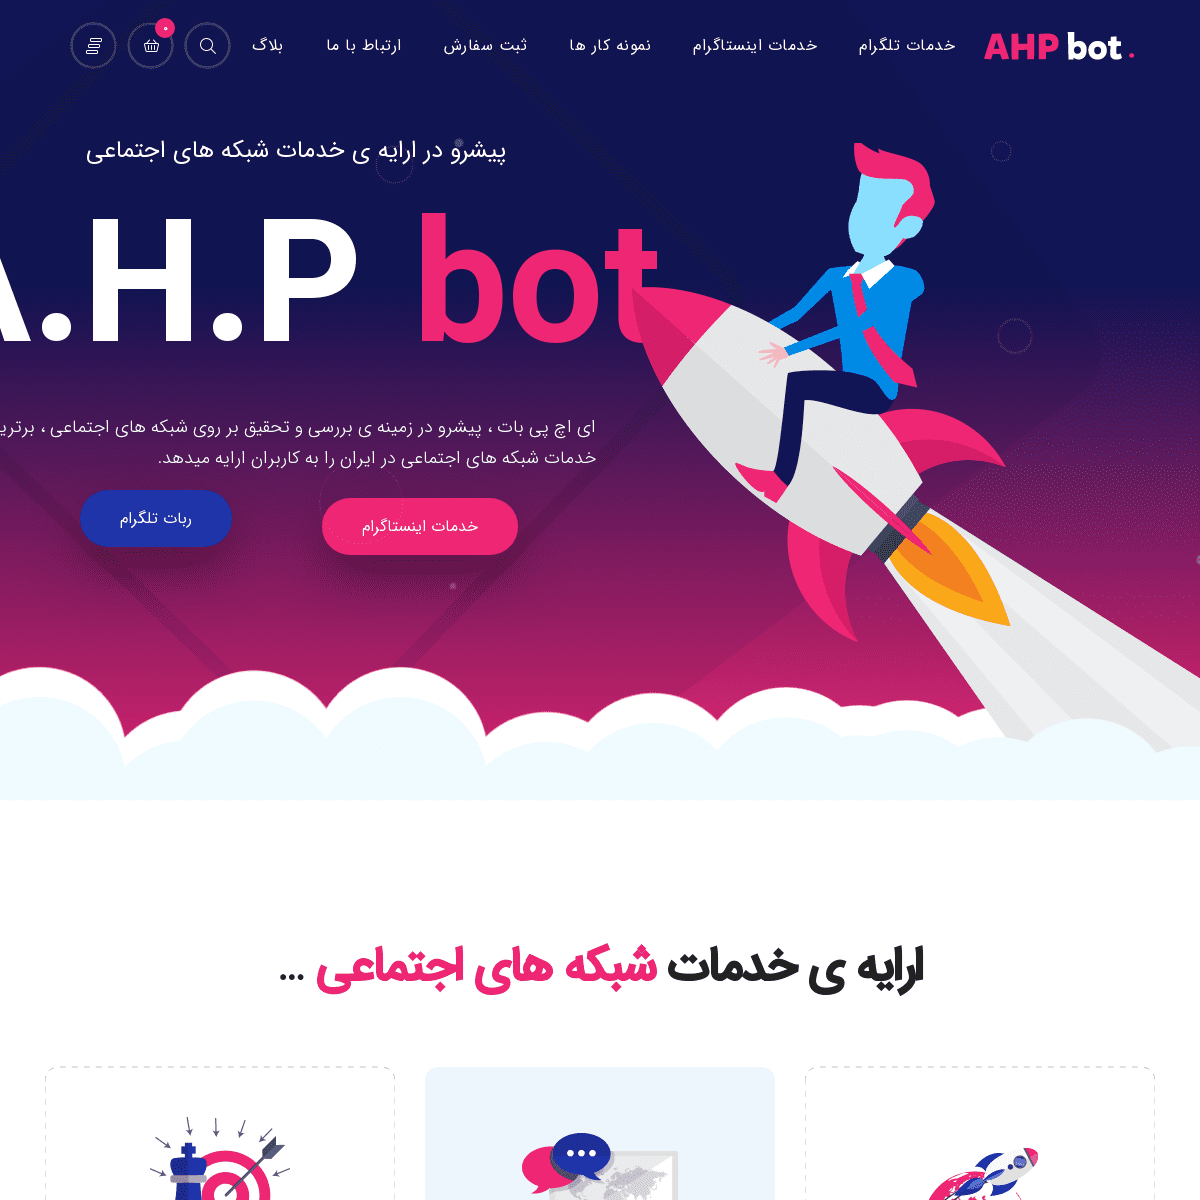 A complete backup of ahpbot.com